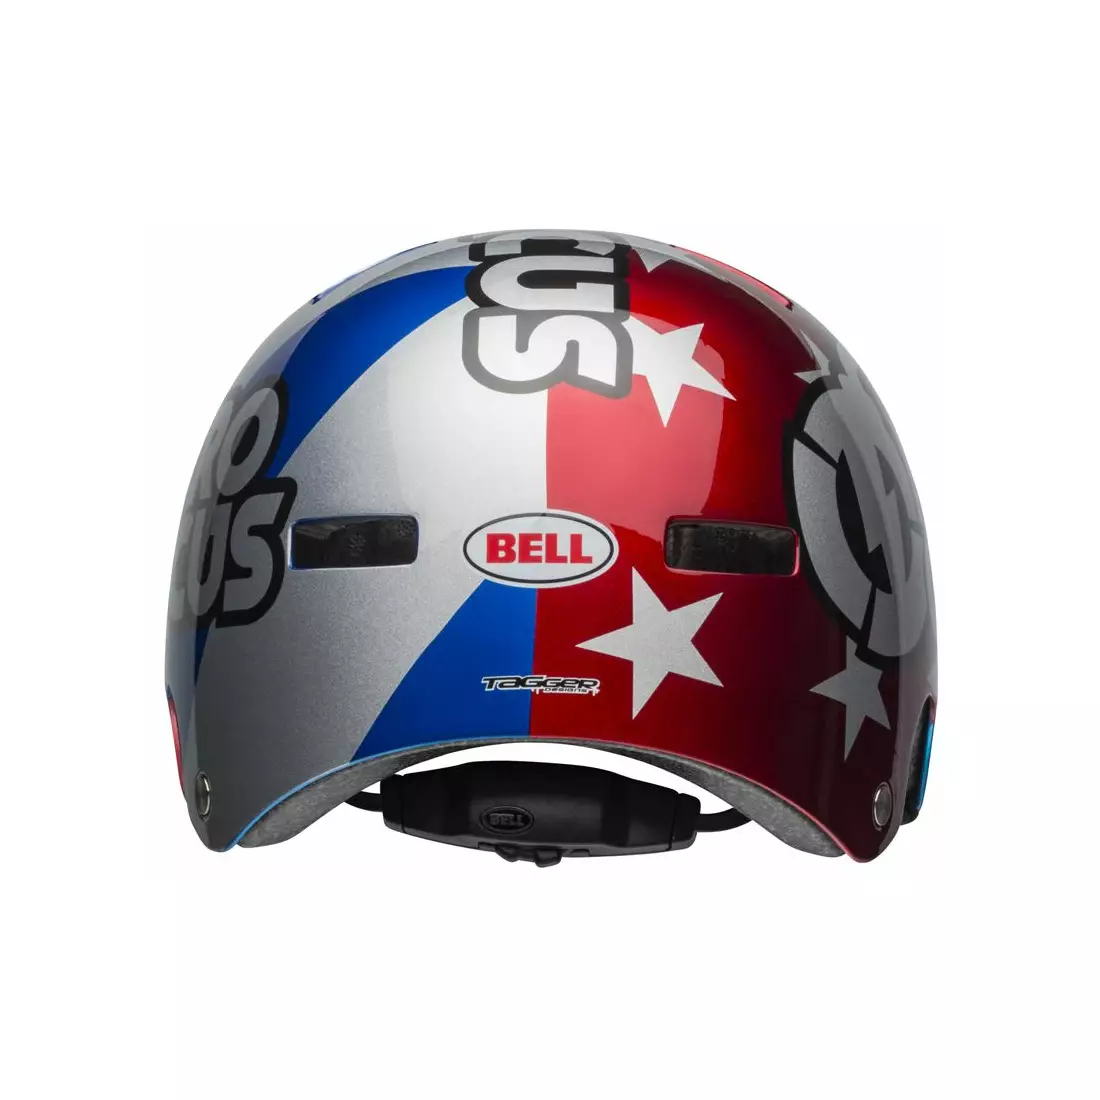 BELL LOCAL bmx helmet nitro circus gloss silver blue red